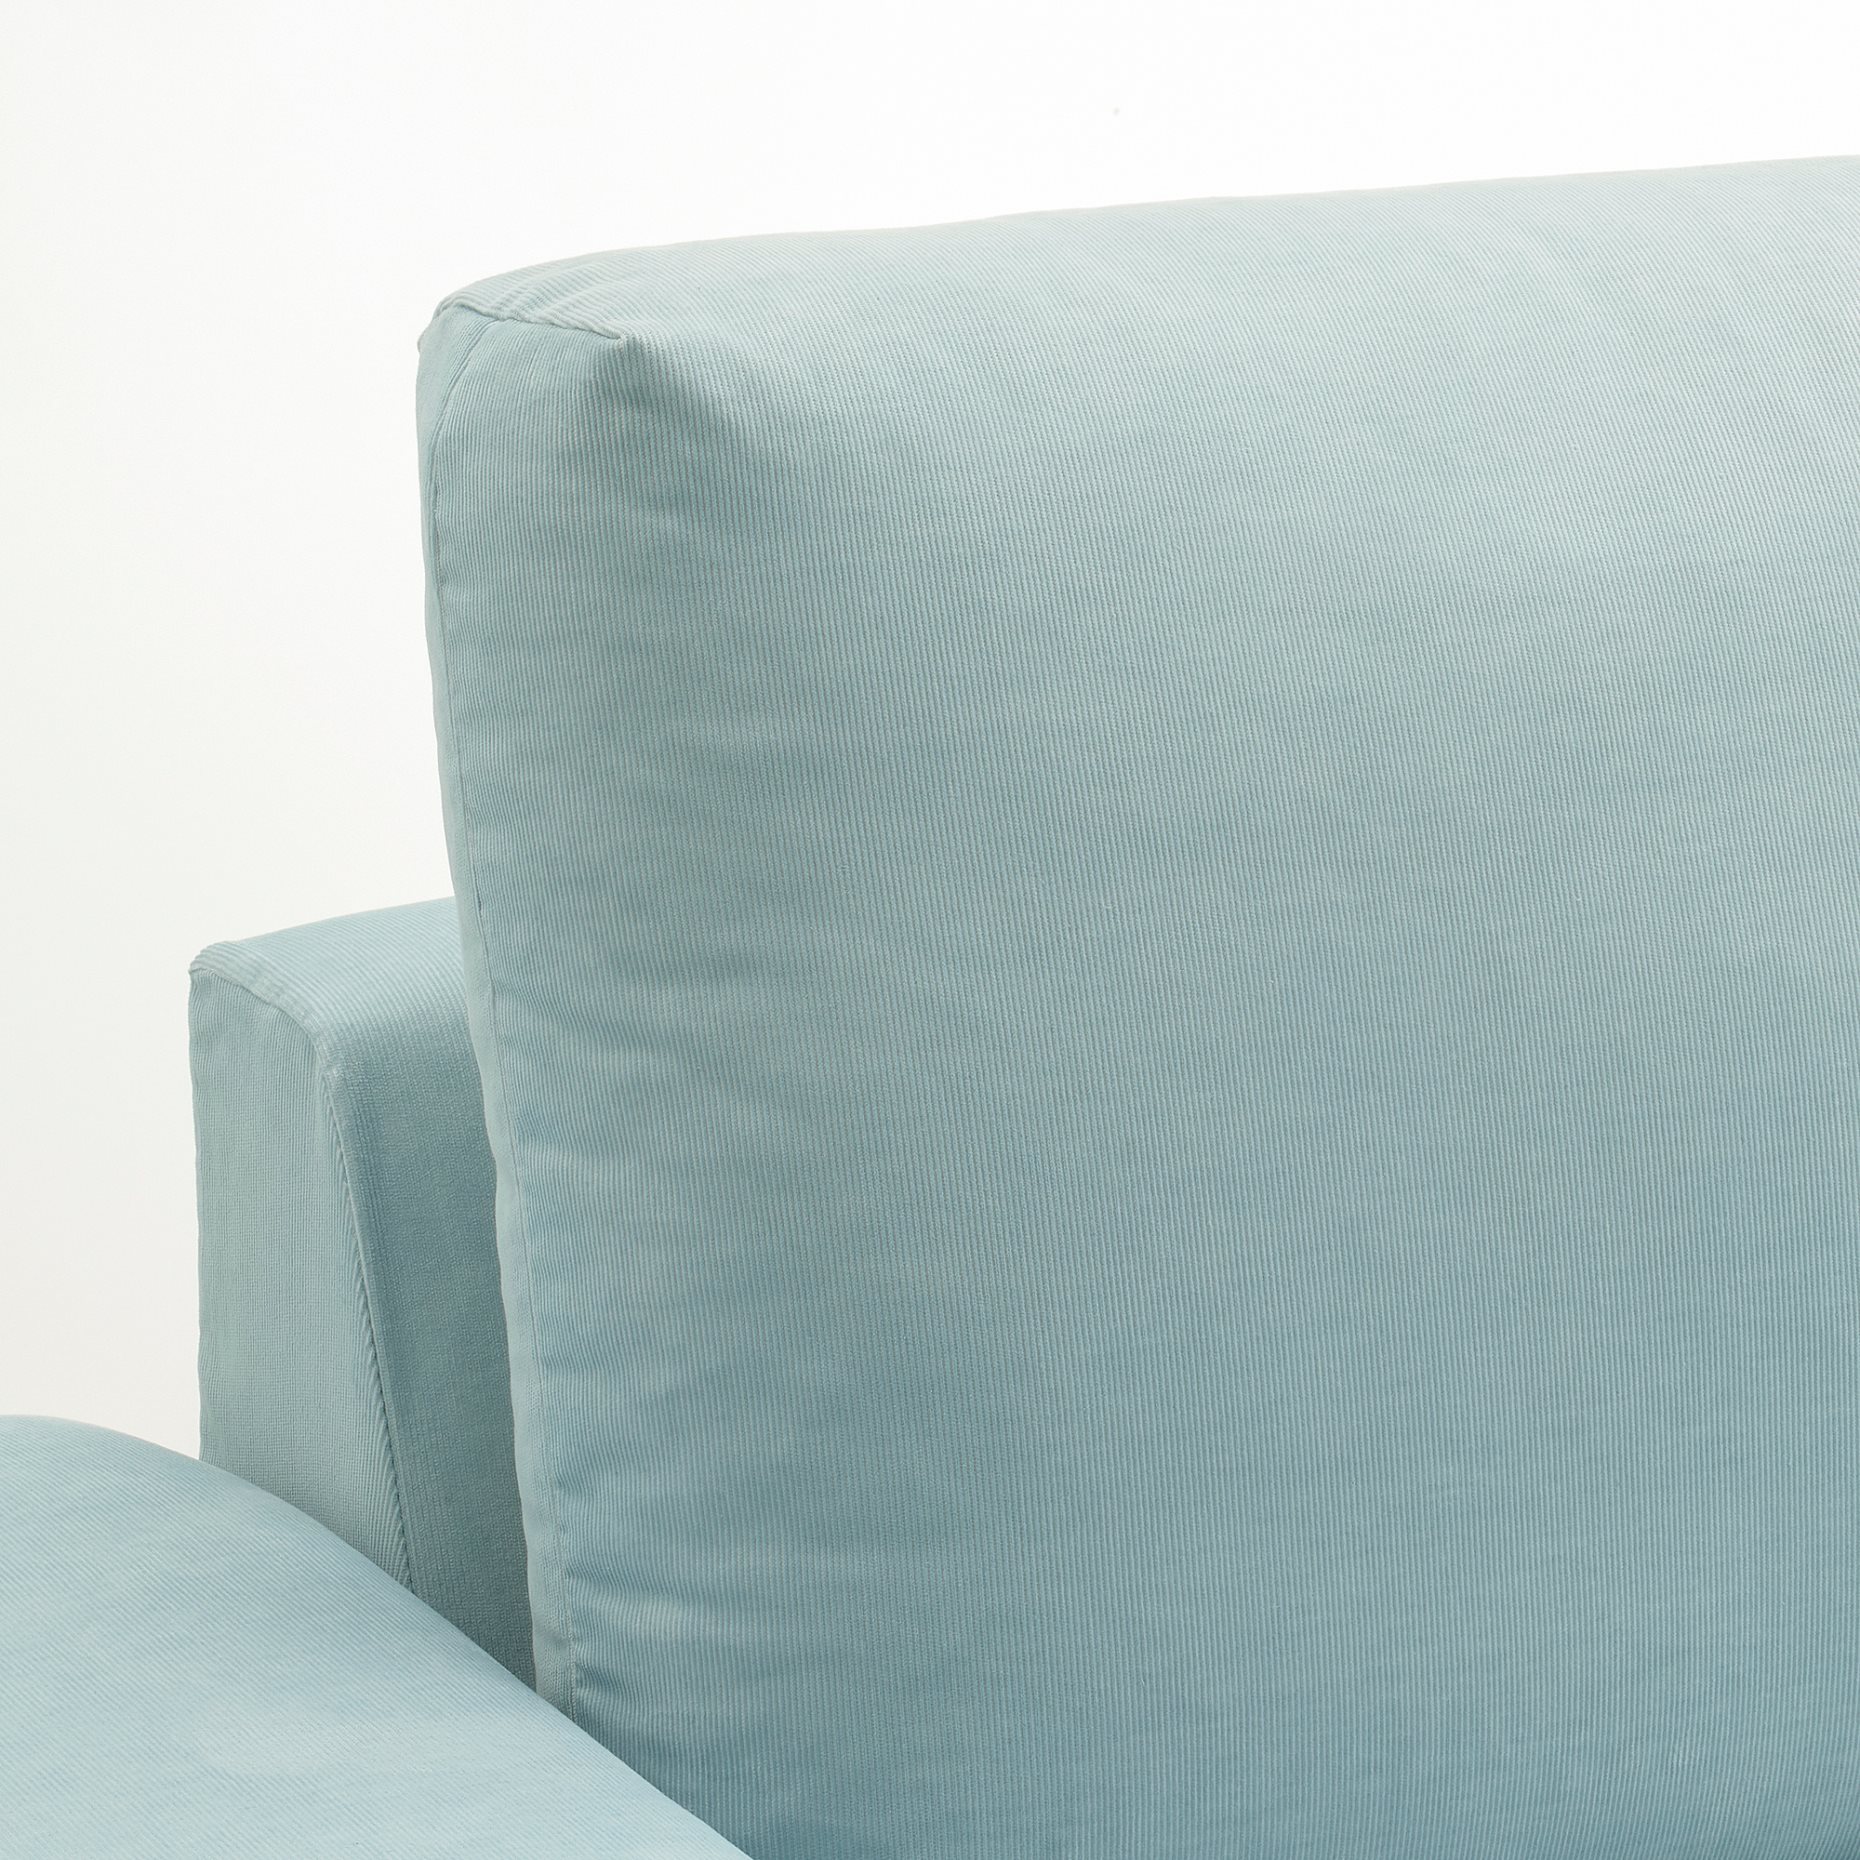 VIMLE, 3-seat sofa-bed with wide armrests, 395.372.36